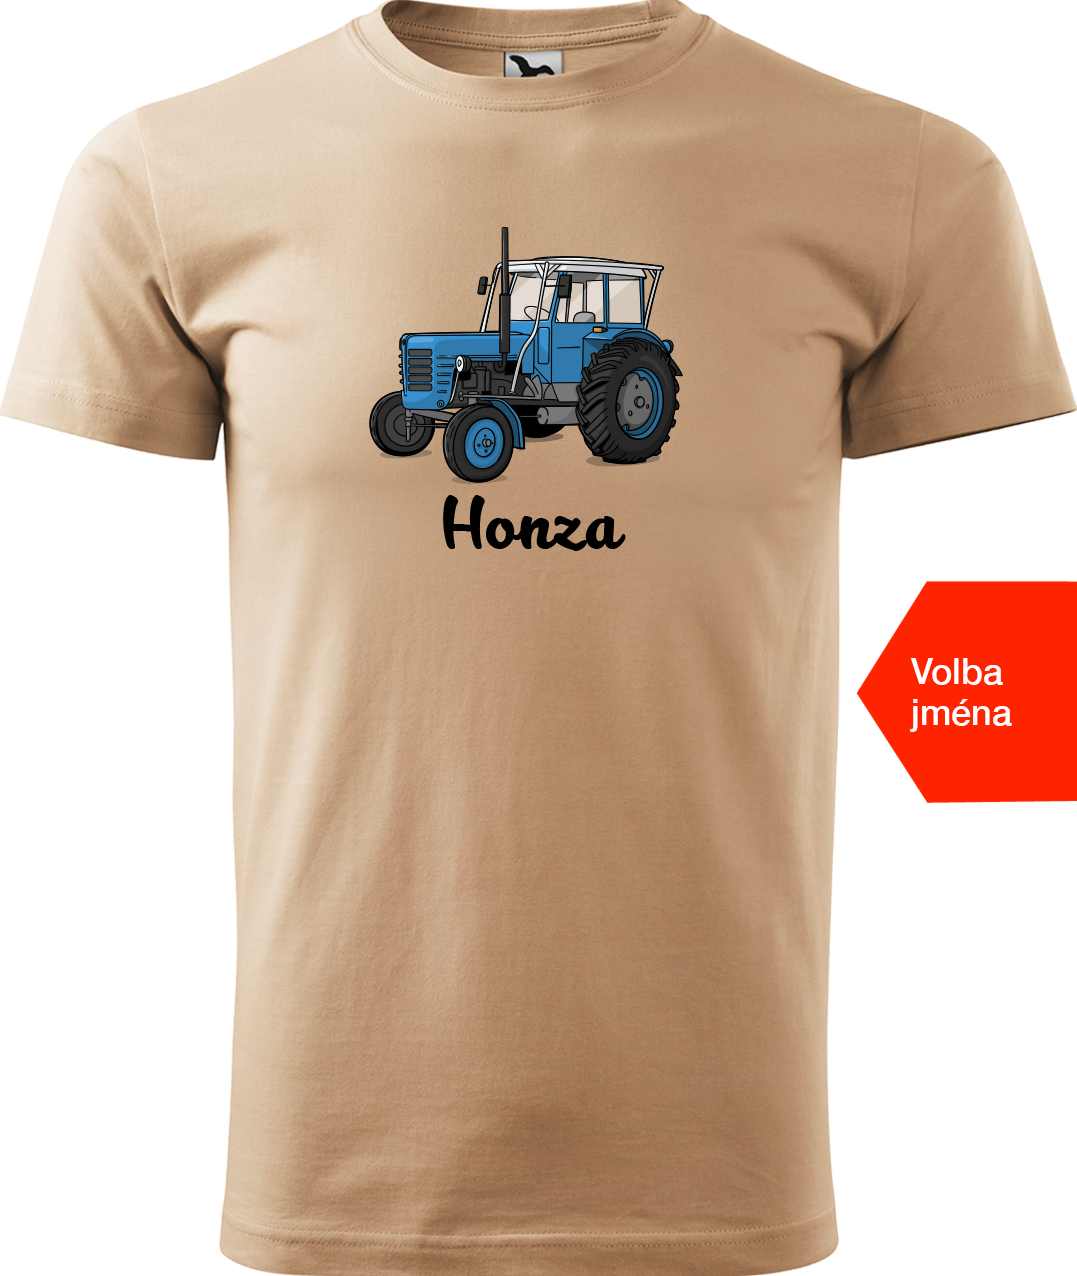 Tričko s traktorem a jménem - Starý traktor Velikost: S, Barva: Písková (08)